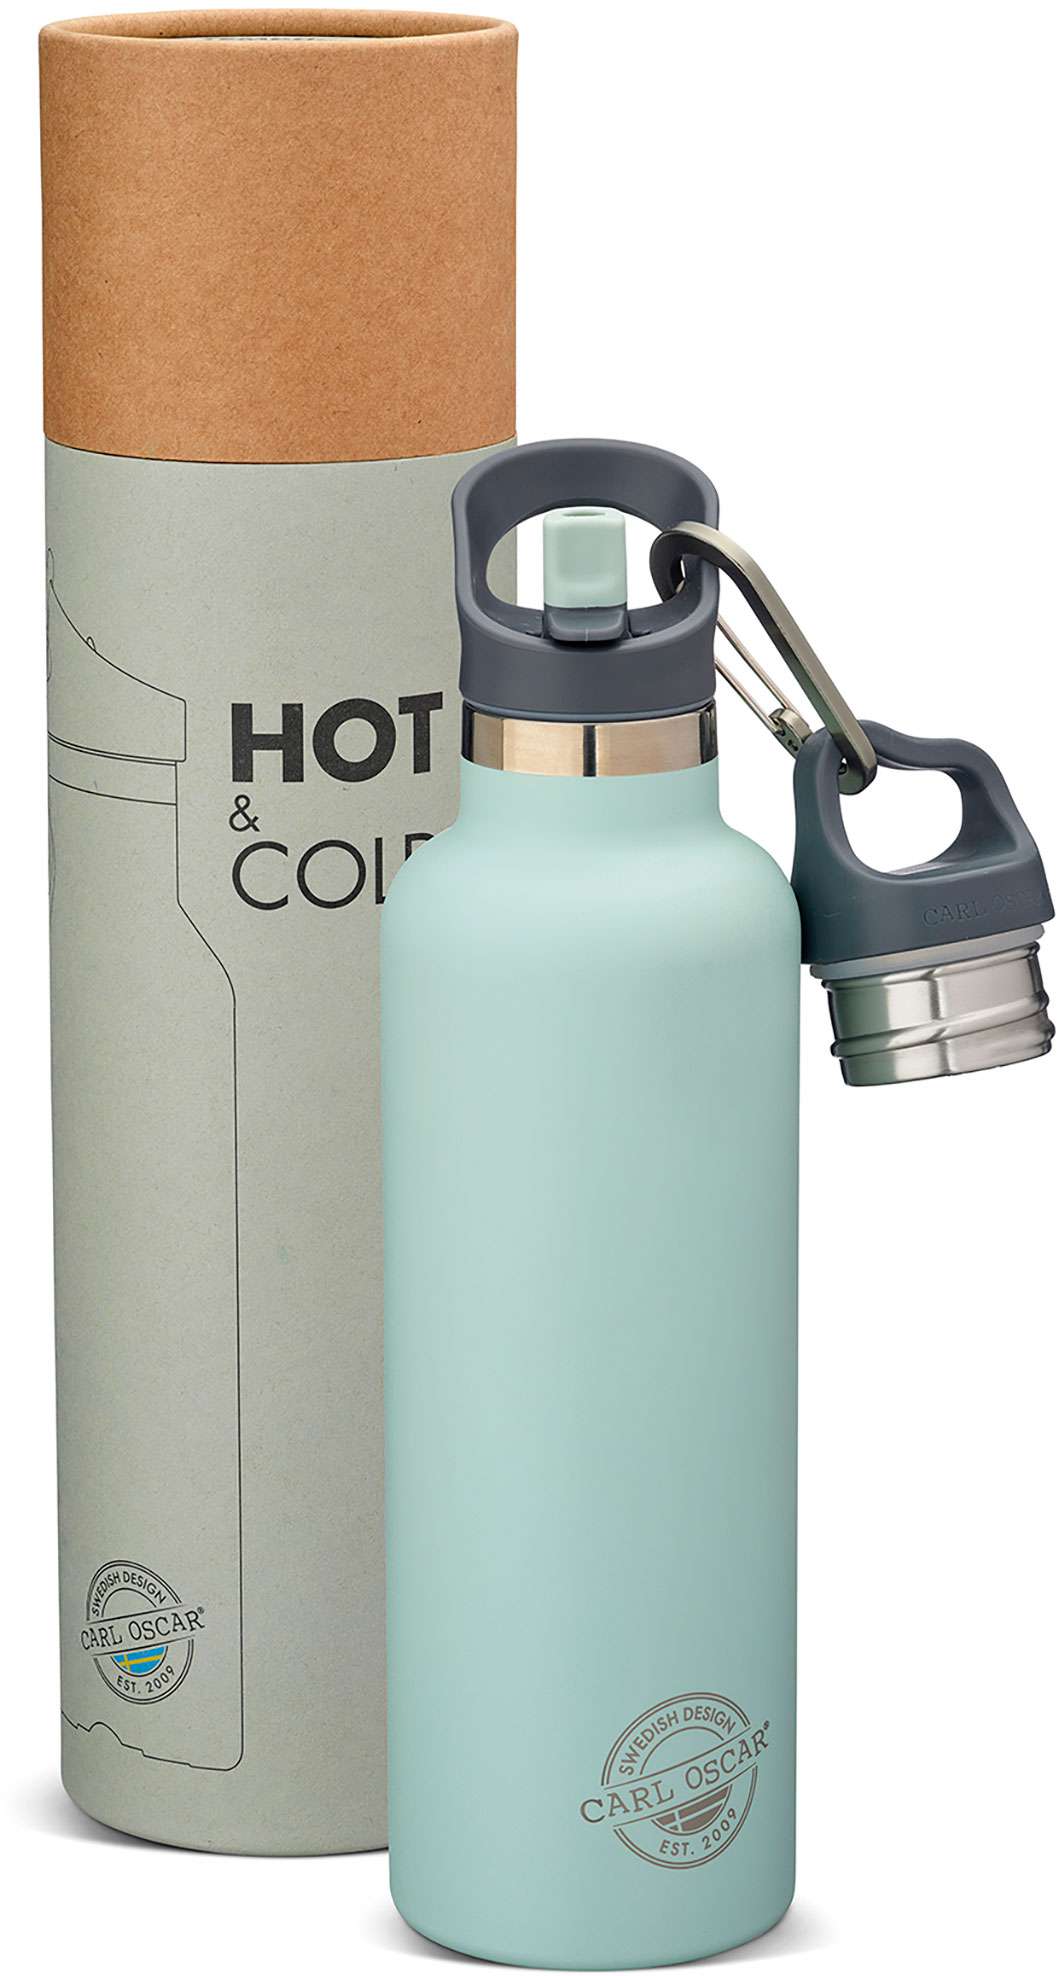 TEMPflask™ 700ml Thermal Bottle Green - Carl Oscar